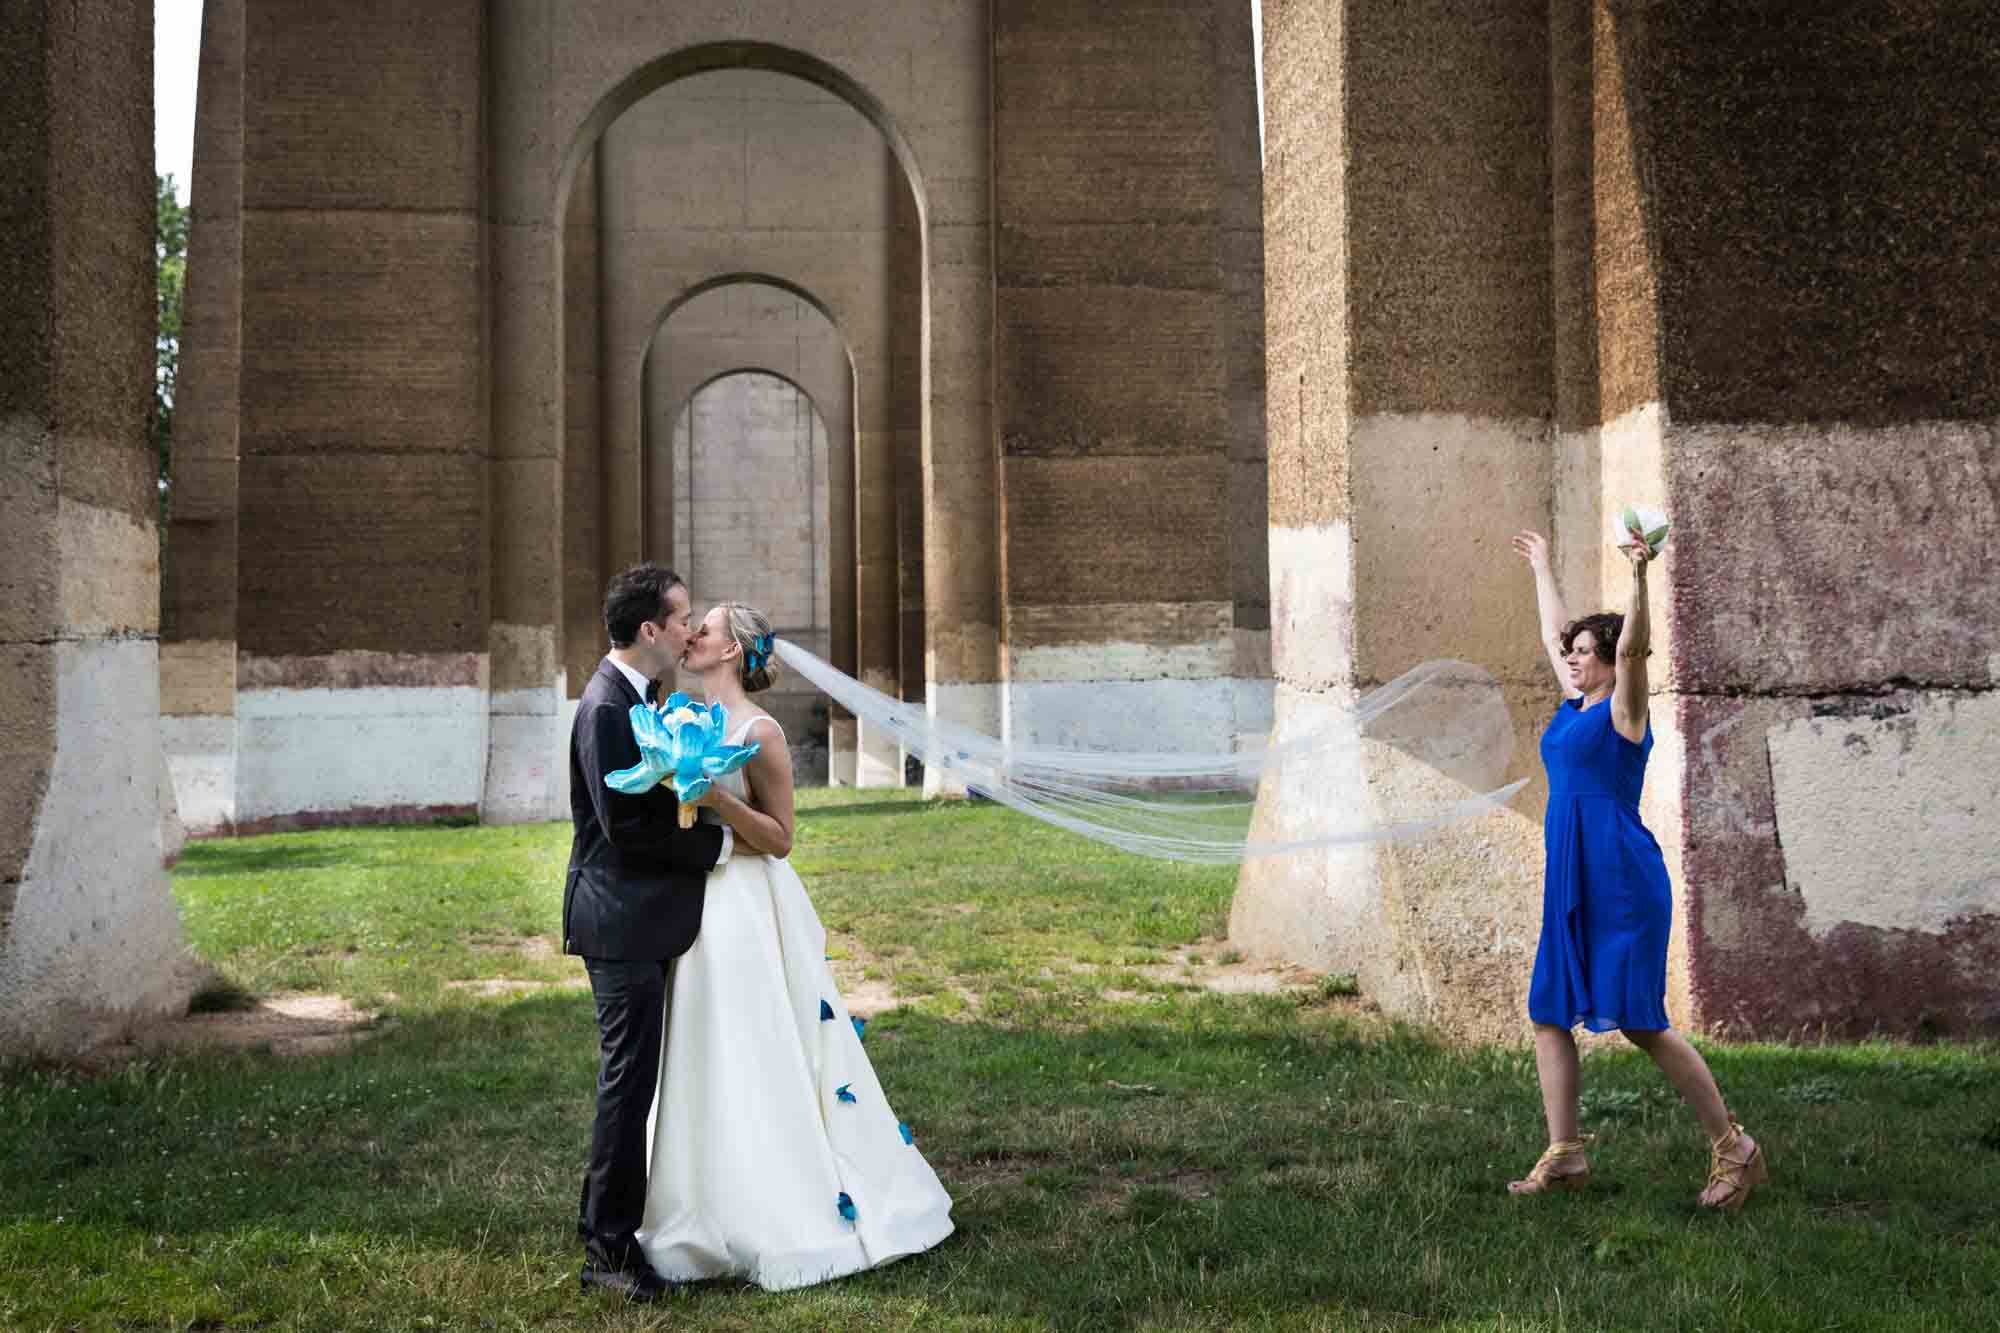 Bridesmaid in blue dress throwing up bride's veil as she hugs grooms